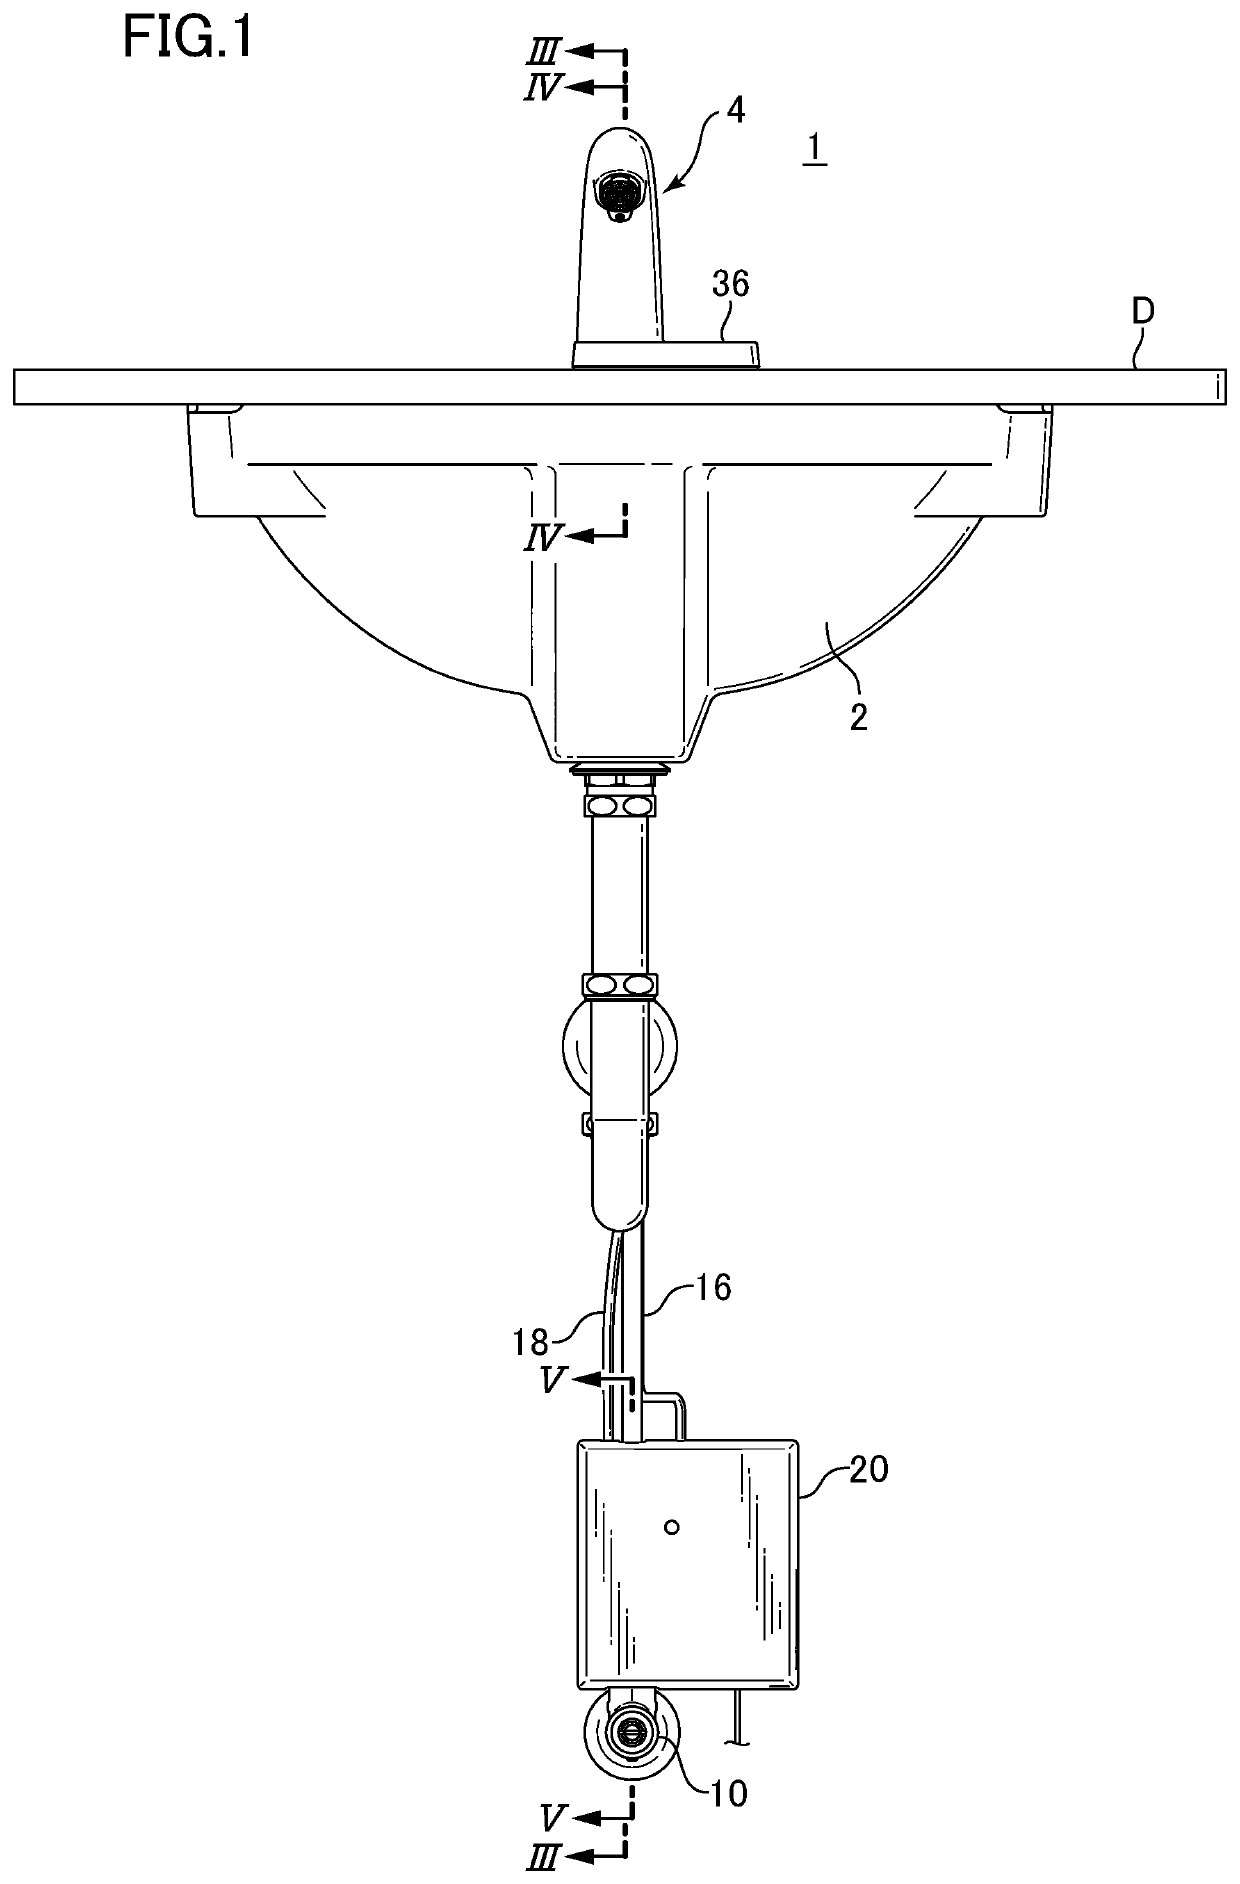 Faucet apparatus